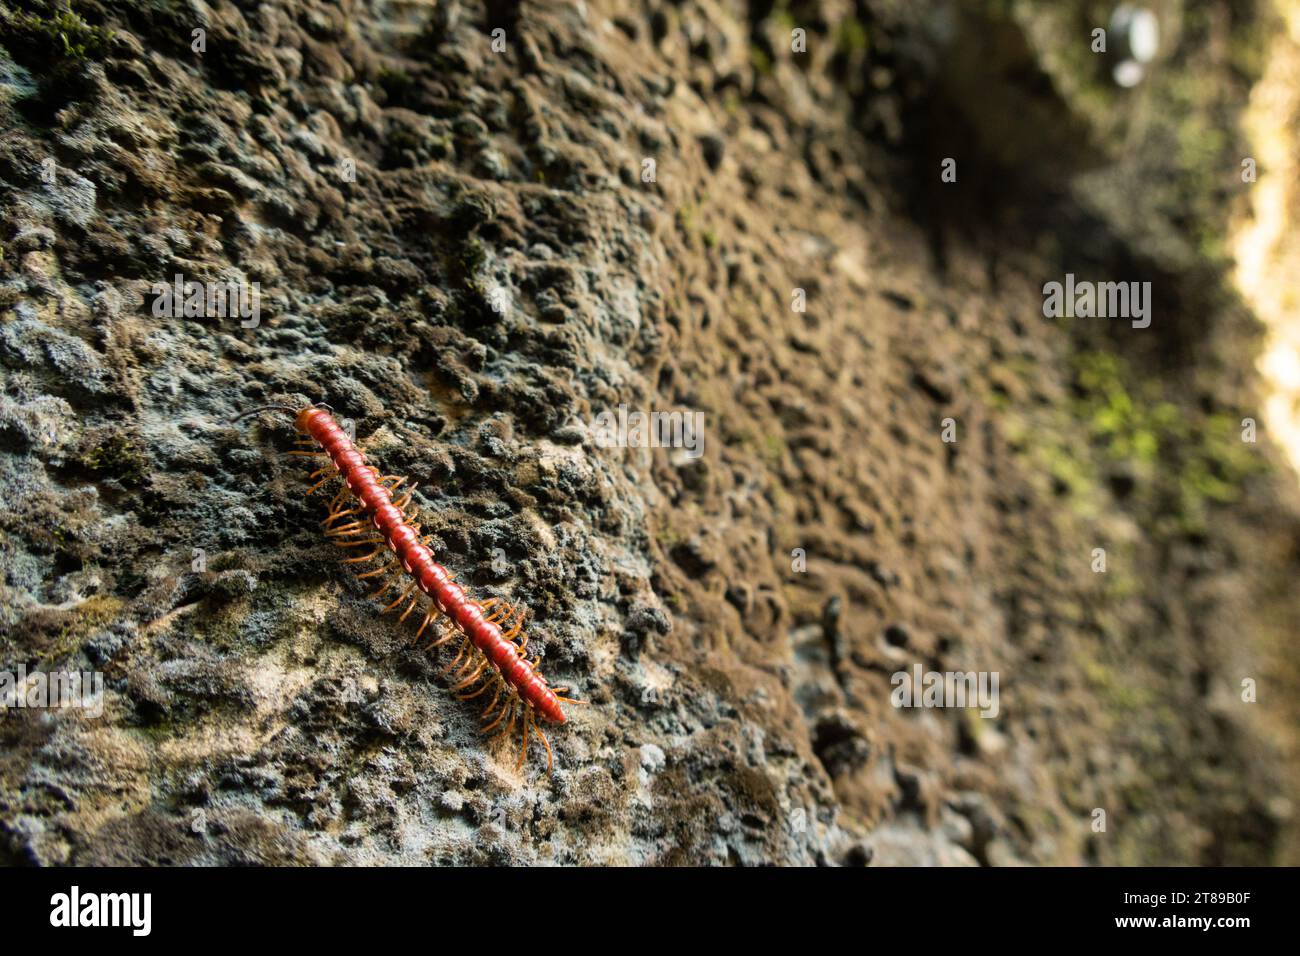 Red millipede (polydesmid, strigamia, chelodesmidae) in Sumatra, Indonesia Stock Photo